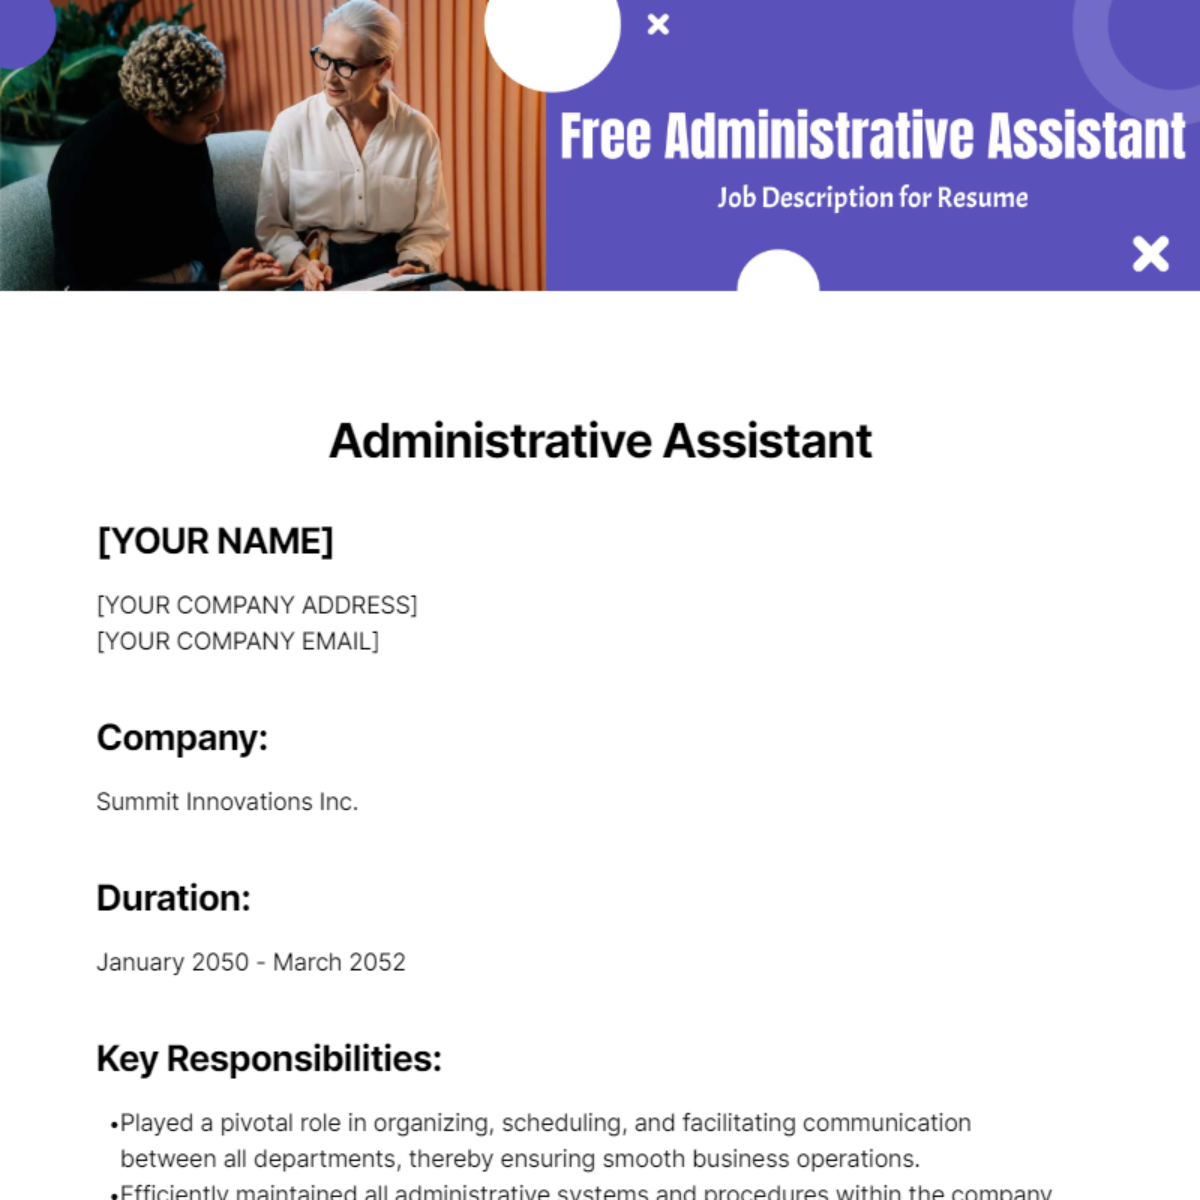 Free Administrative Assistant Job Description for Resume Template